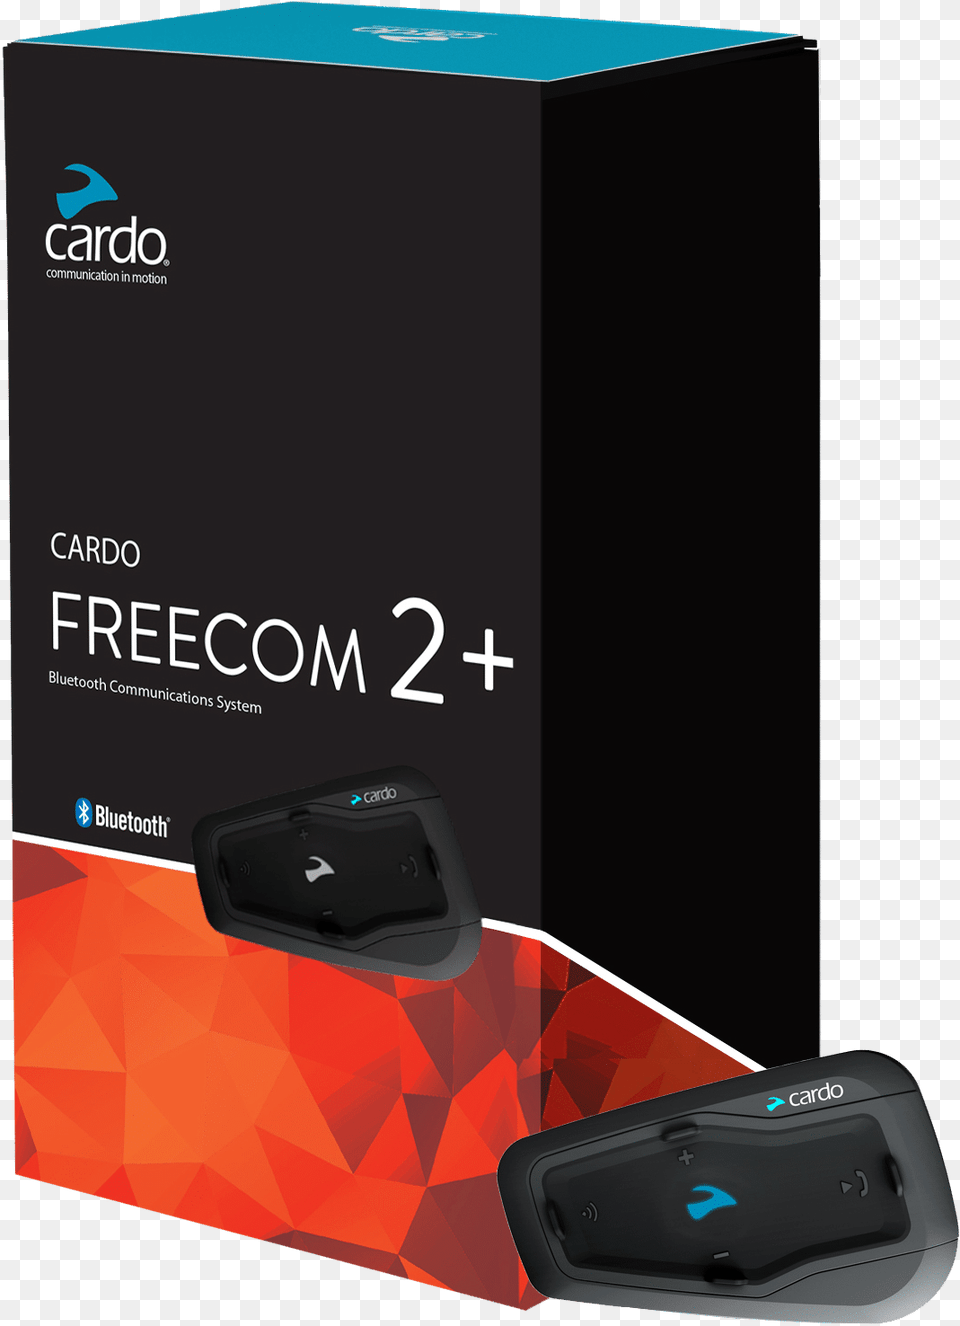 Freecom 2 Plus 2way Intercom Communication System Cardo Cardo Freecom Duo, Computer Hardware, Electronics, Hardware, Adapter Png Image